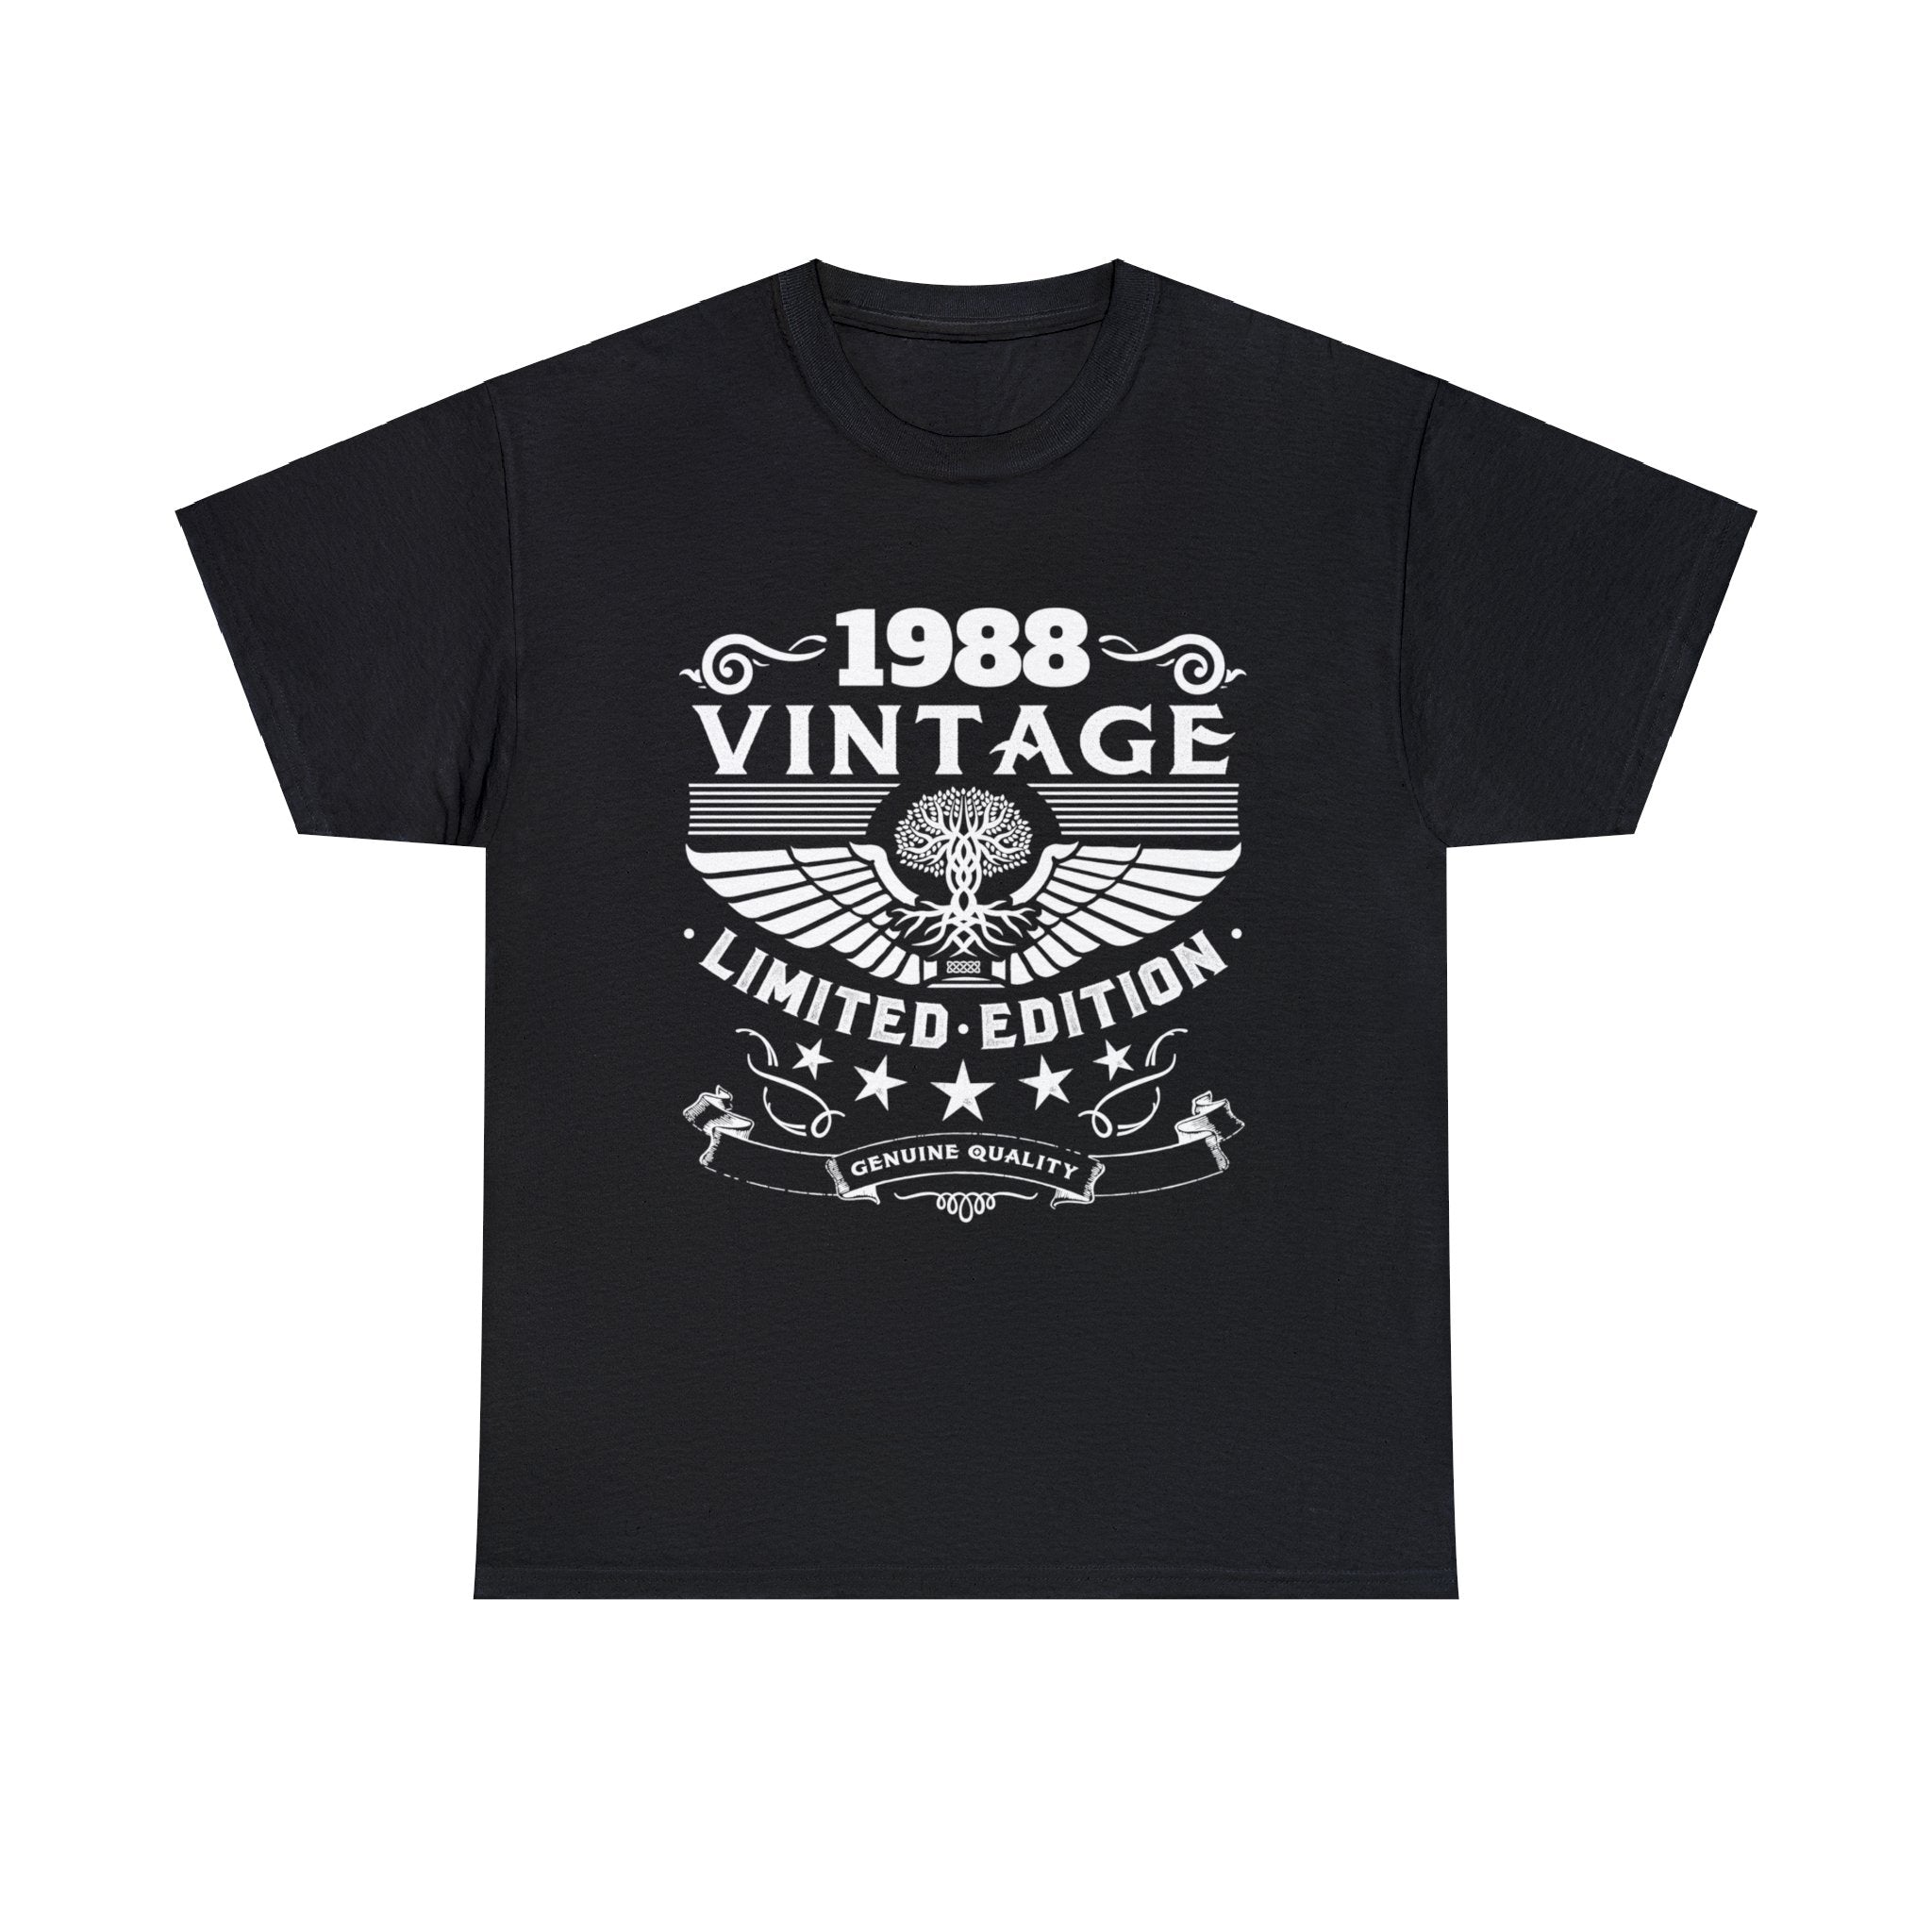 Vintage 1988 TShirt Men Limited Edition BDay 1988 Birthday Mens T Shirts Plus Size Big and Tall